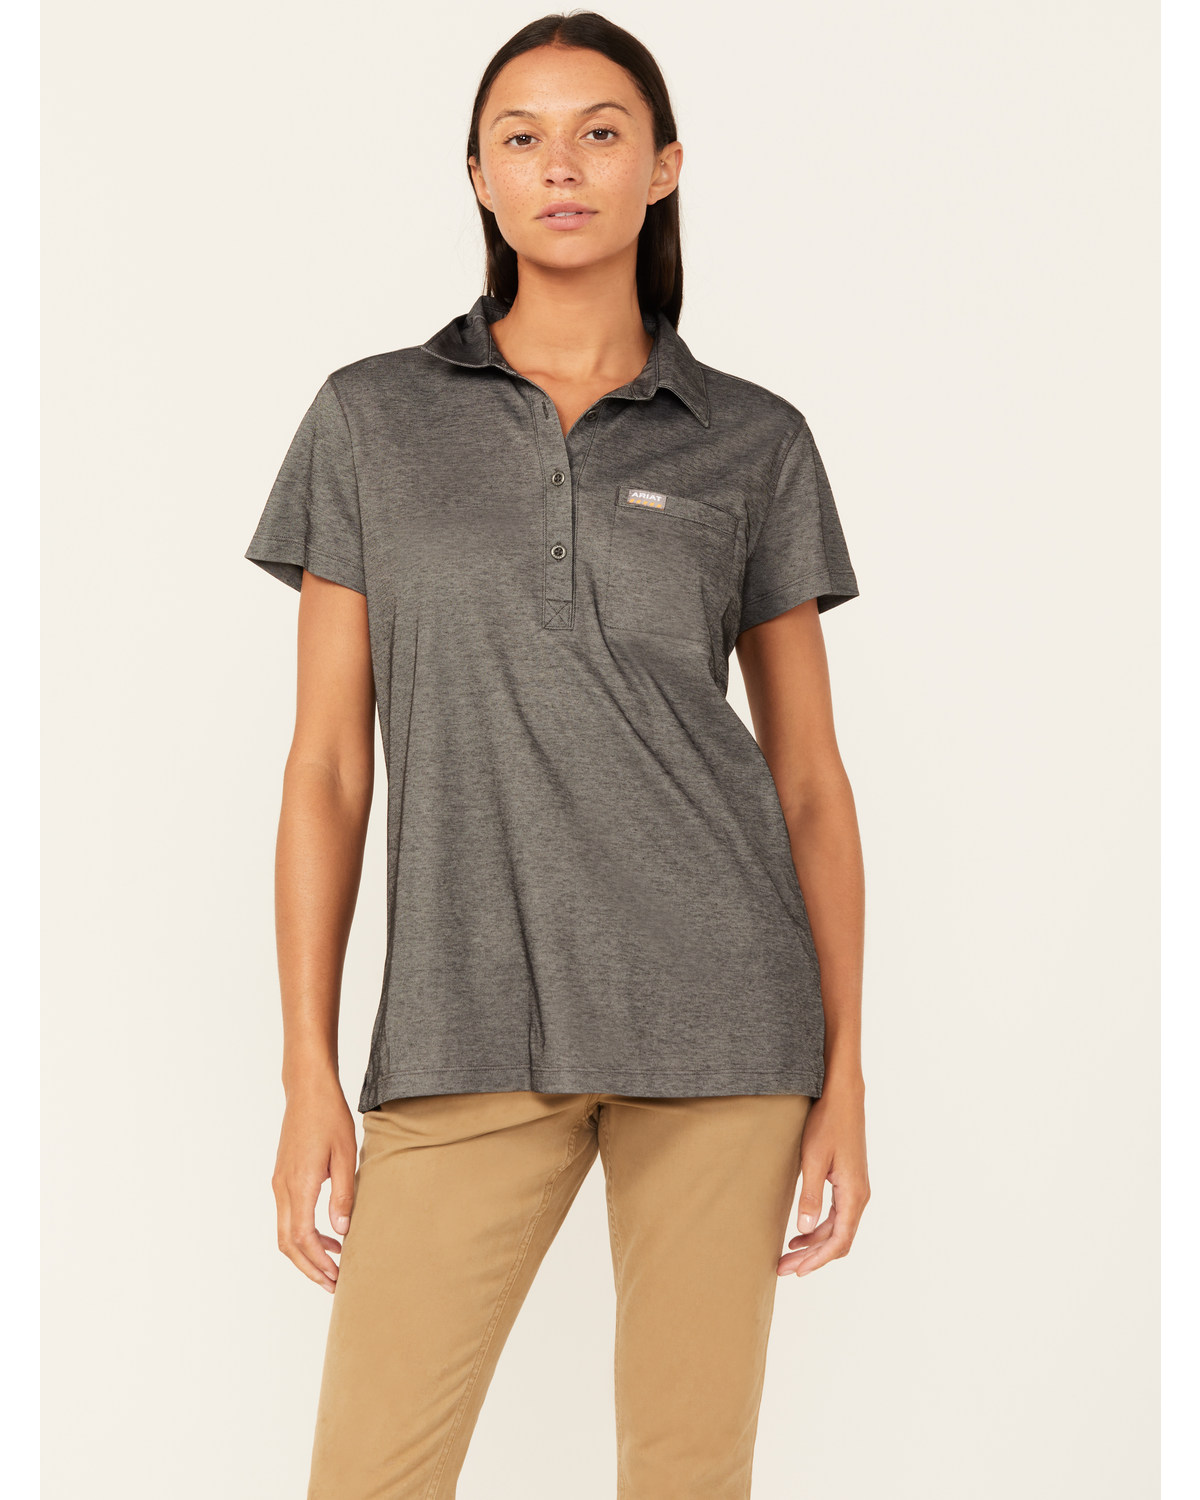 Ariat Women's Rebar Foreman Short Sleeve Polo Shirt